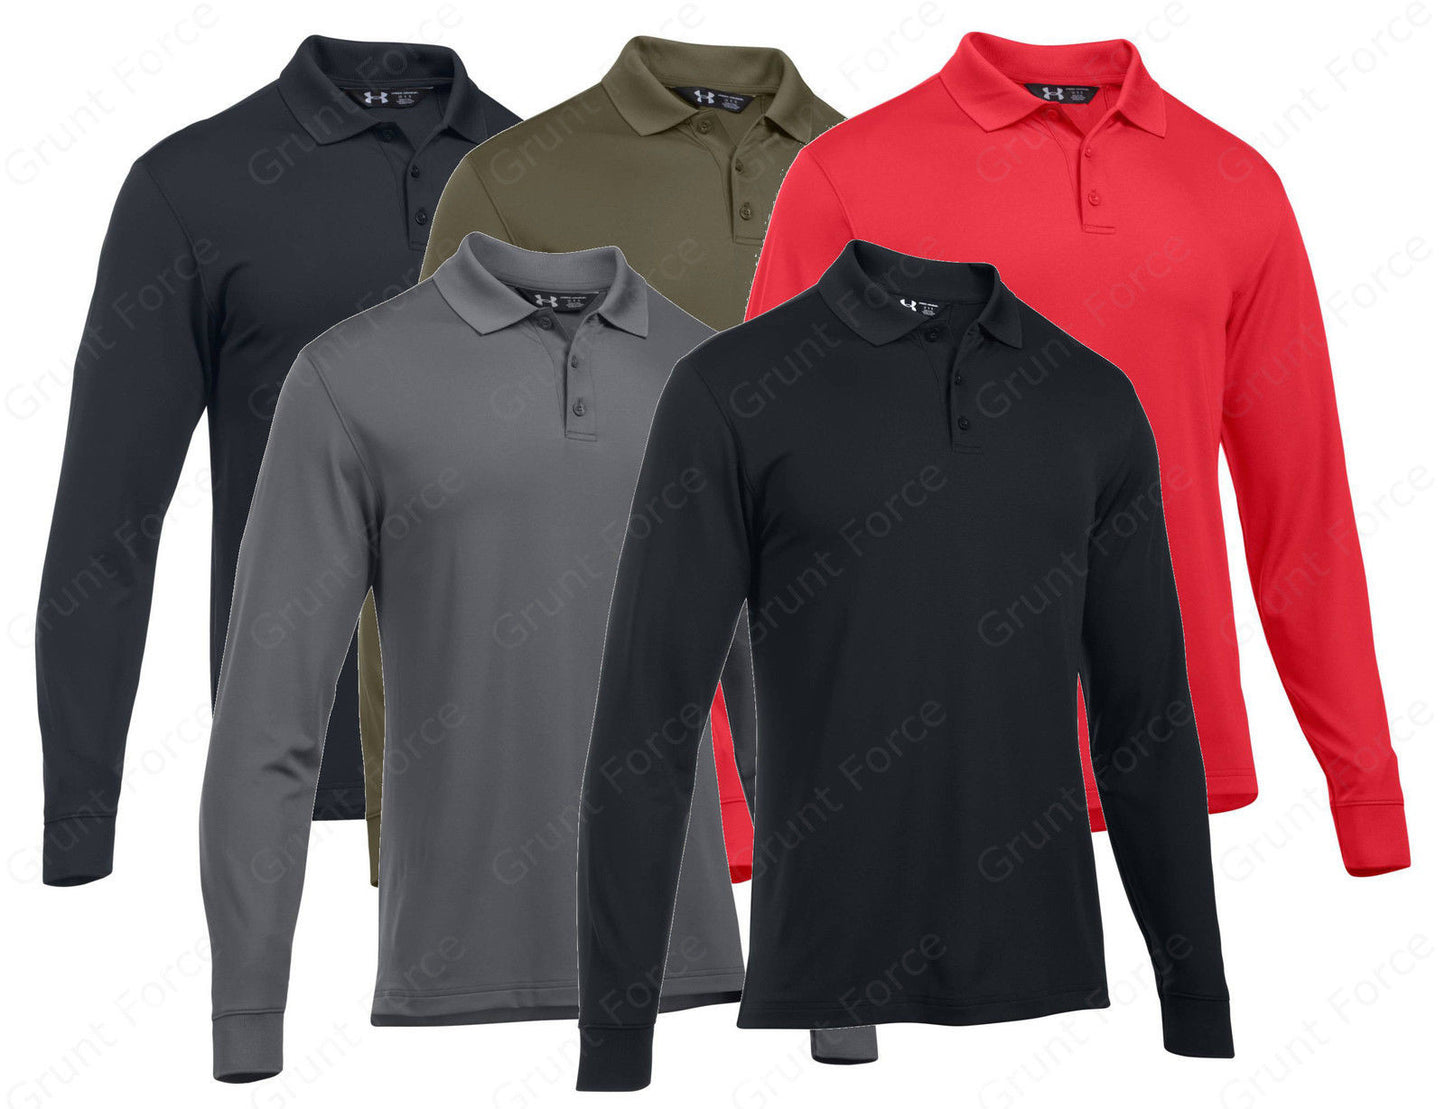 UA Tactical Performance Polo - Under Armour Men's Long Sleeve Tactical Shirt